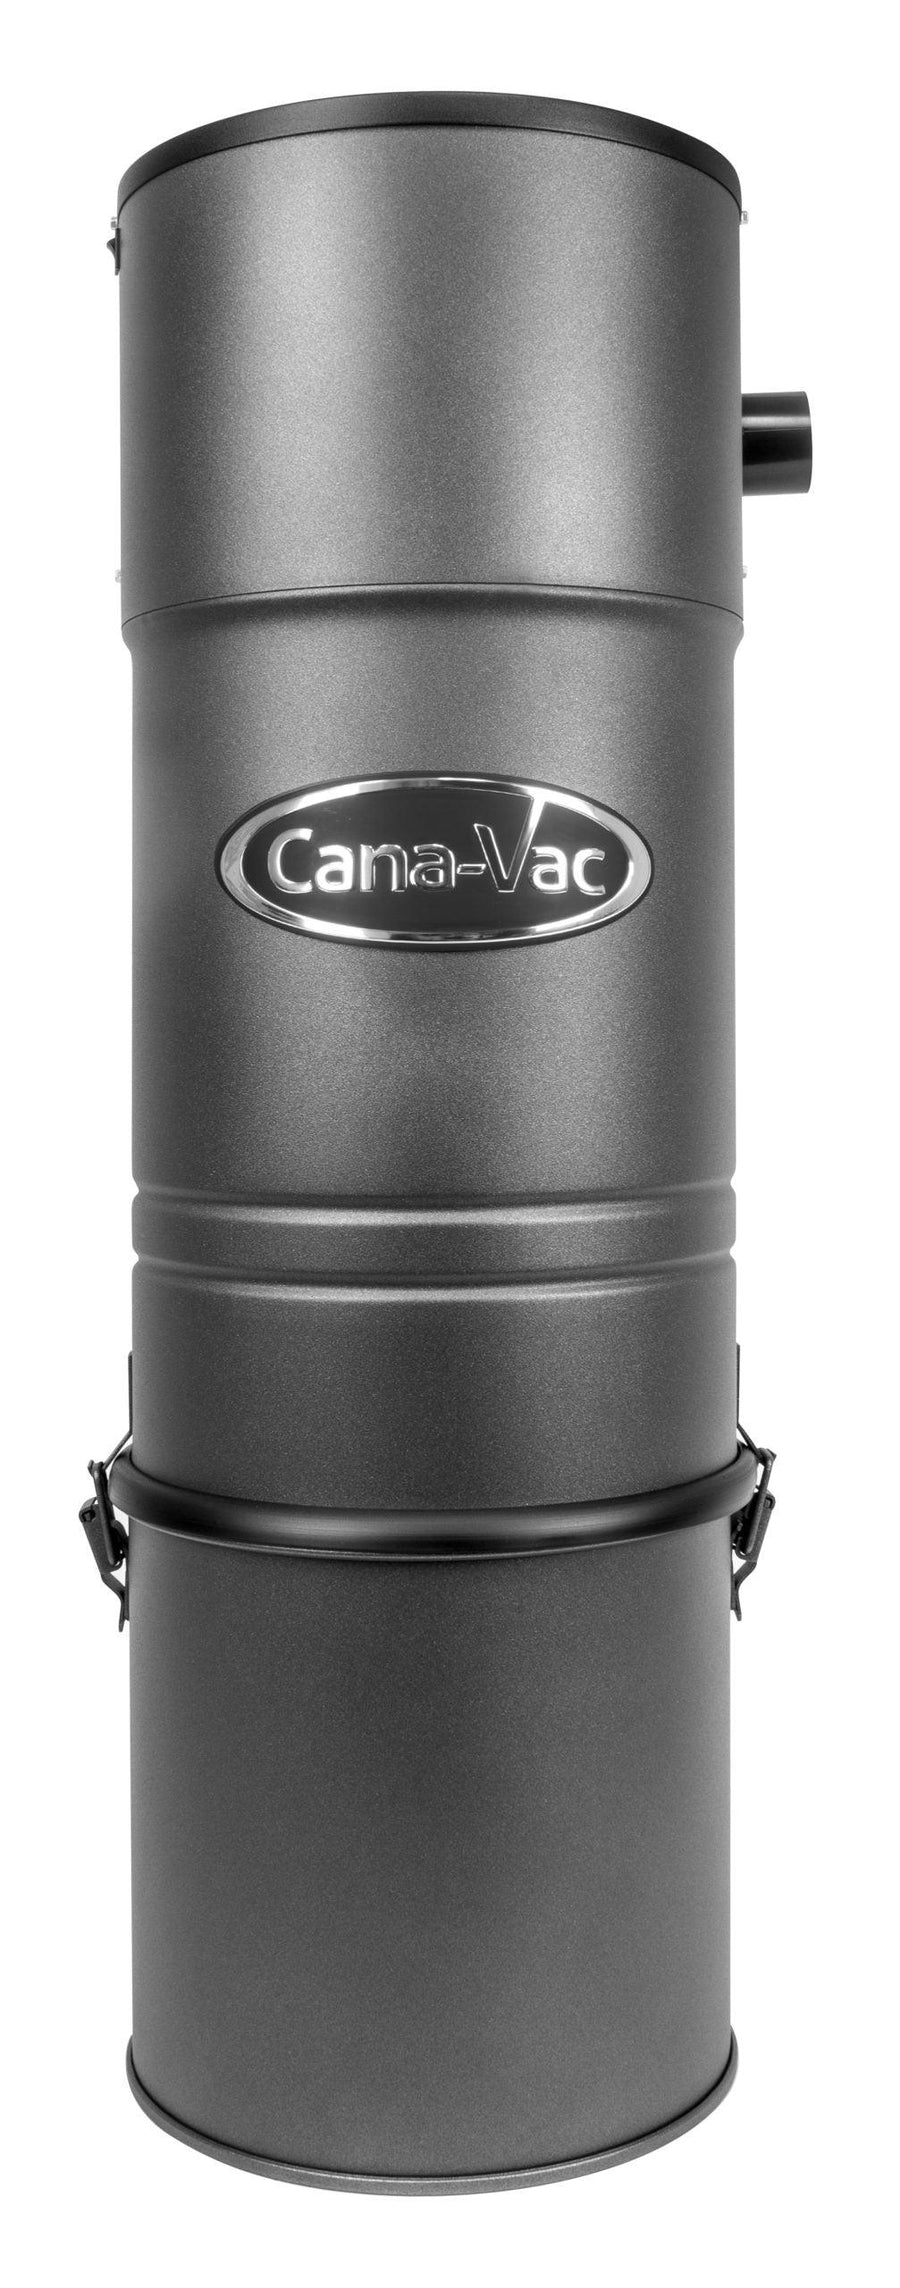 CanaVac CV687 Central Vacuum Unit - Geek Vacuums